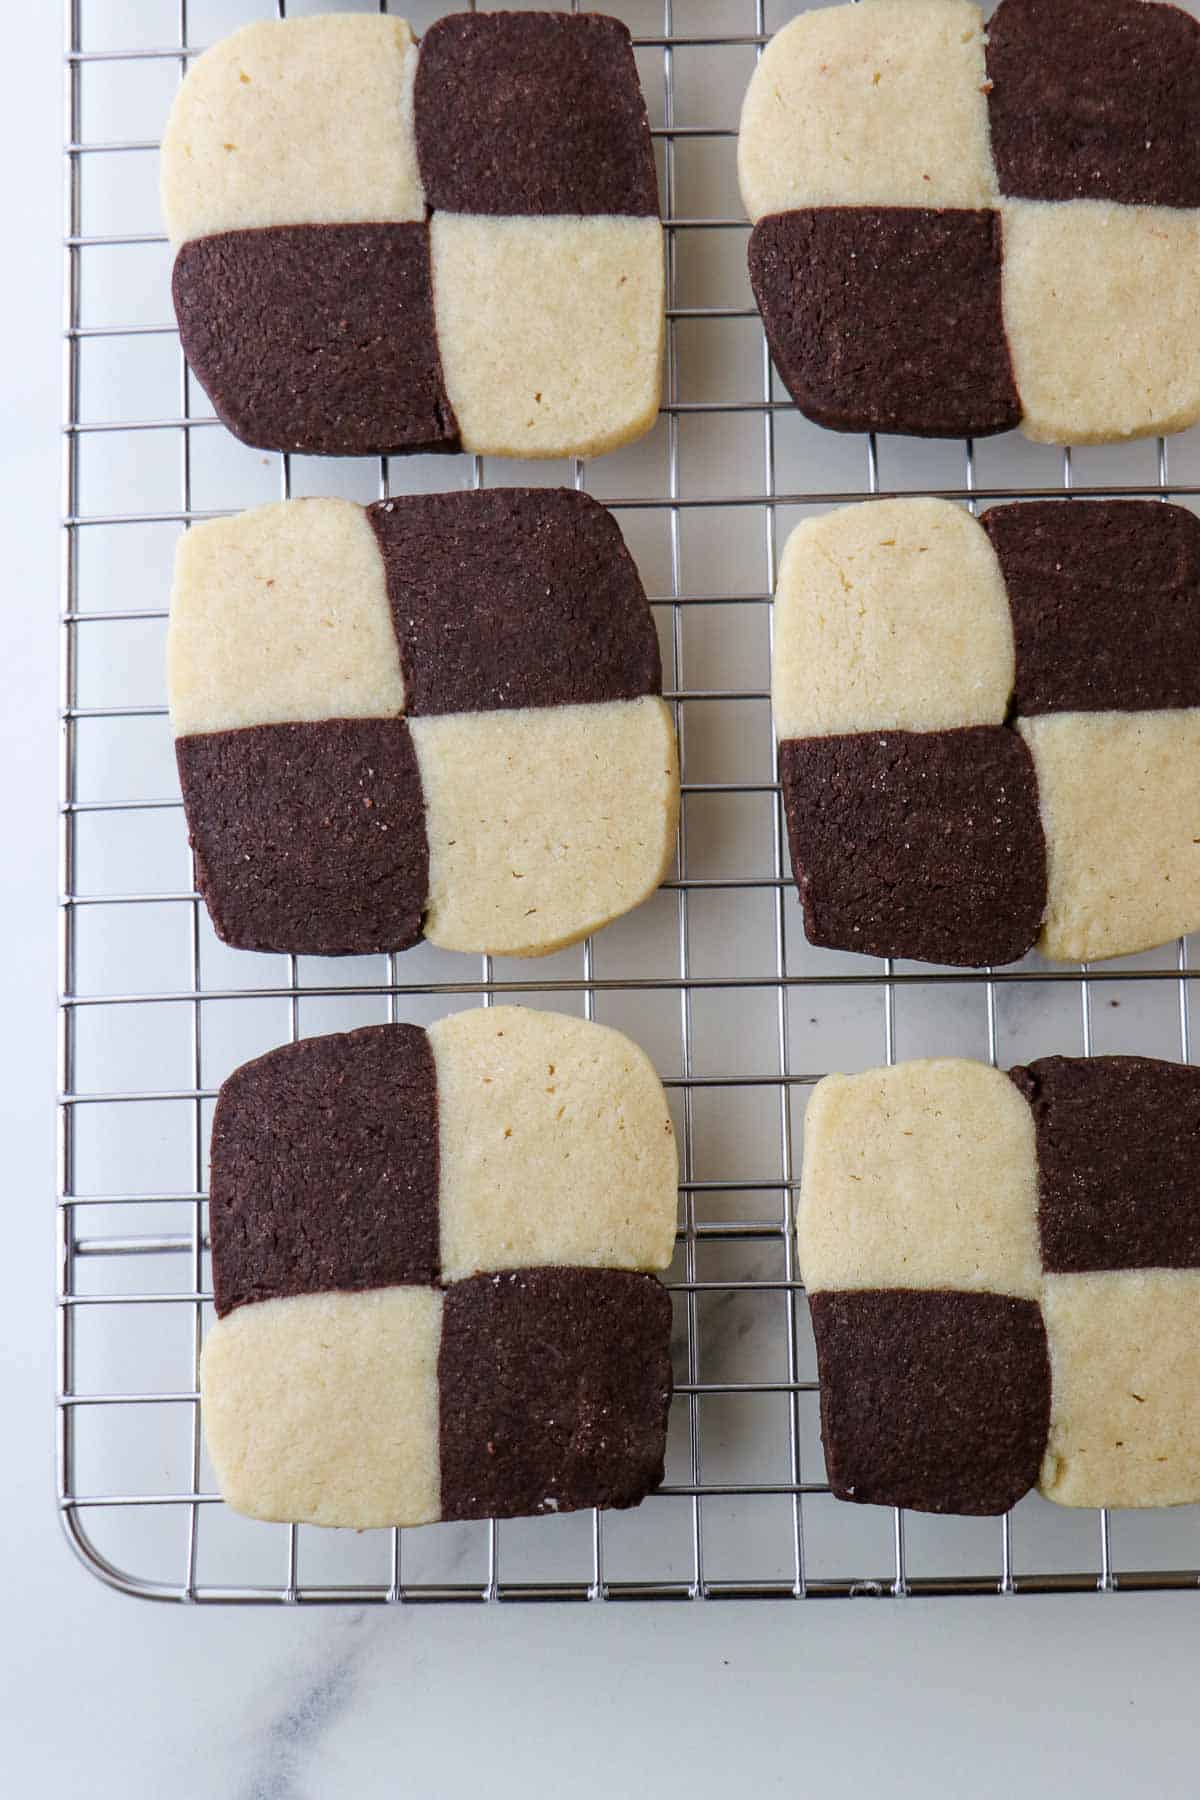 Checkerboard cookies on a metal cooling rack.